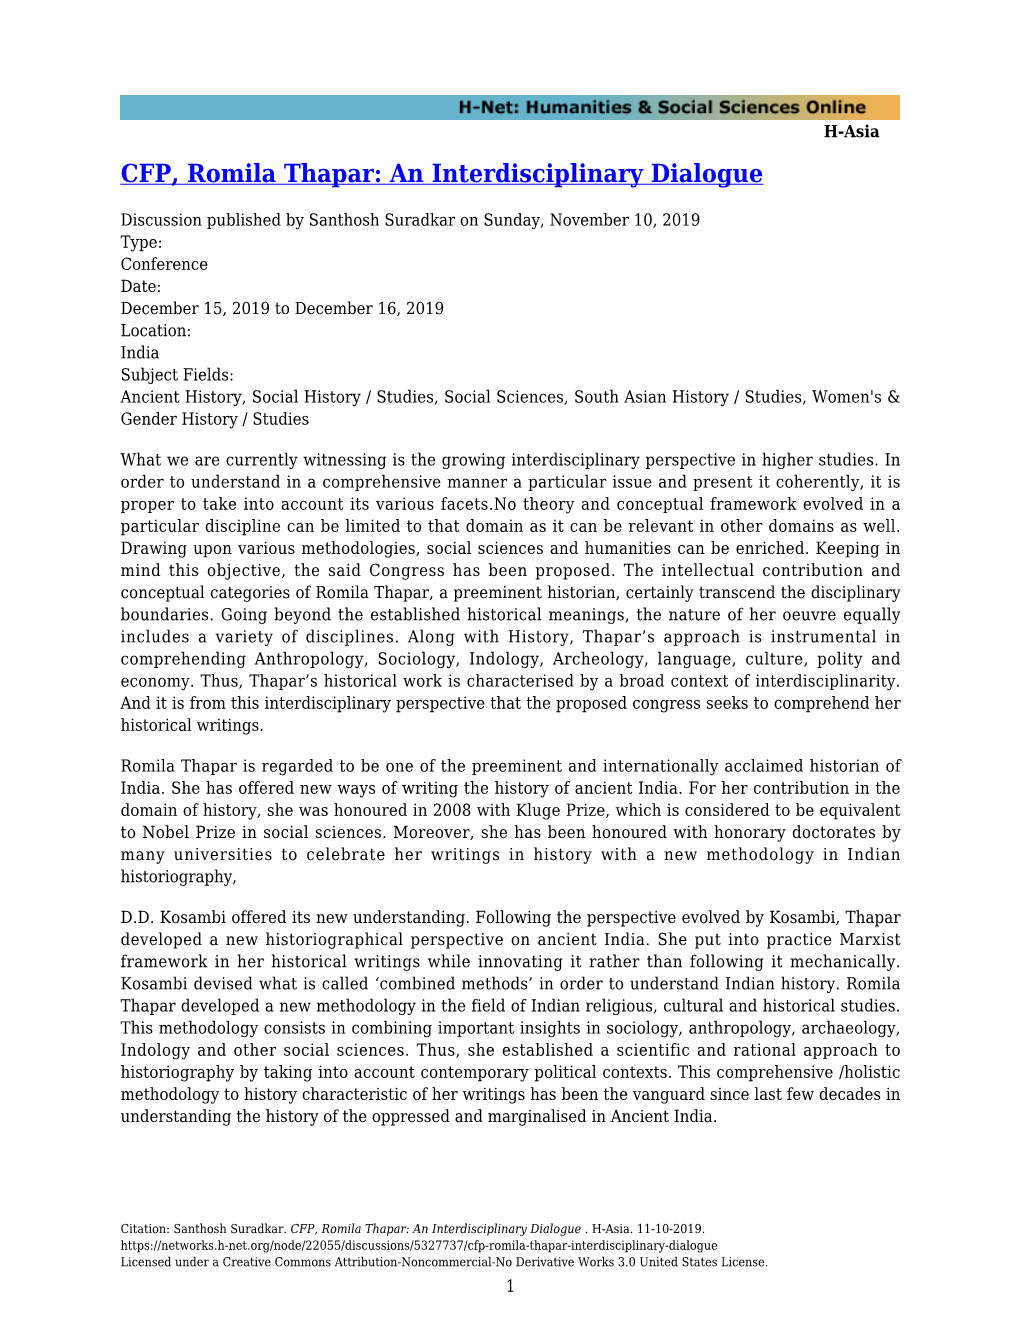 CFP, Romila Thapar: an Interdisciplinary Dialogue